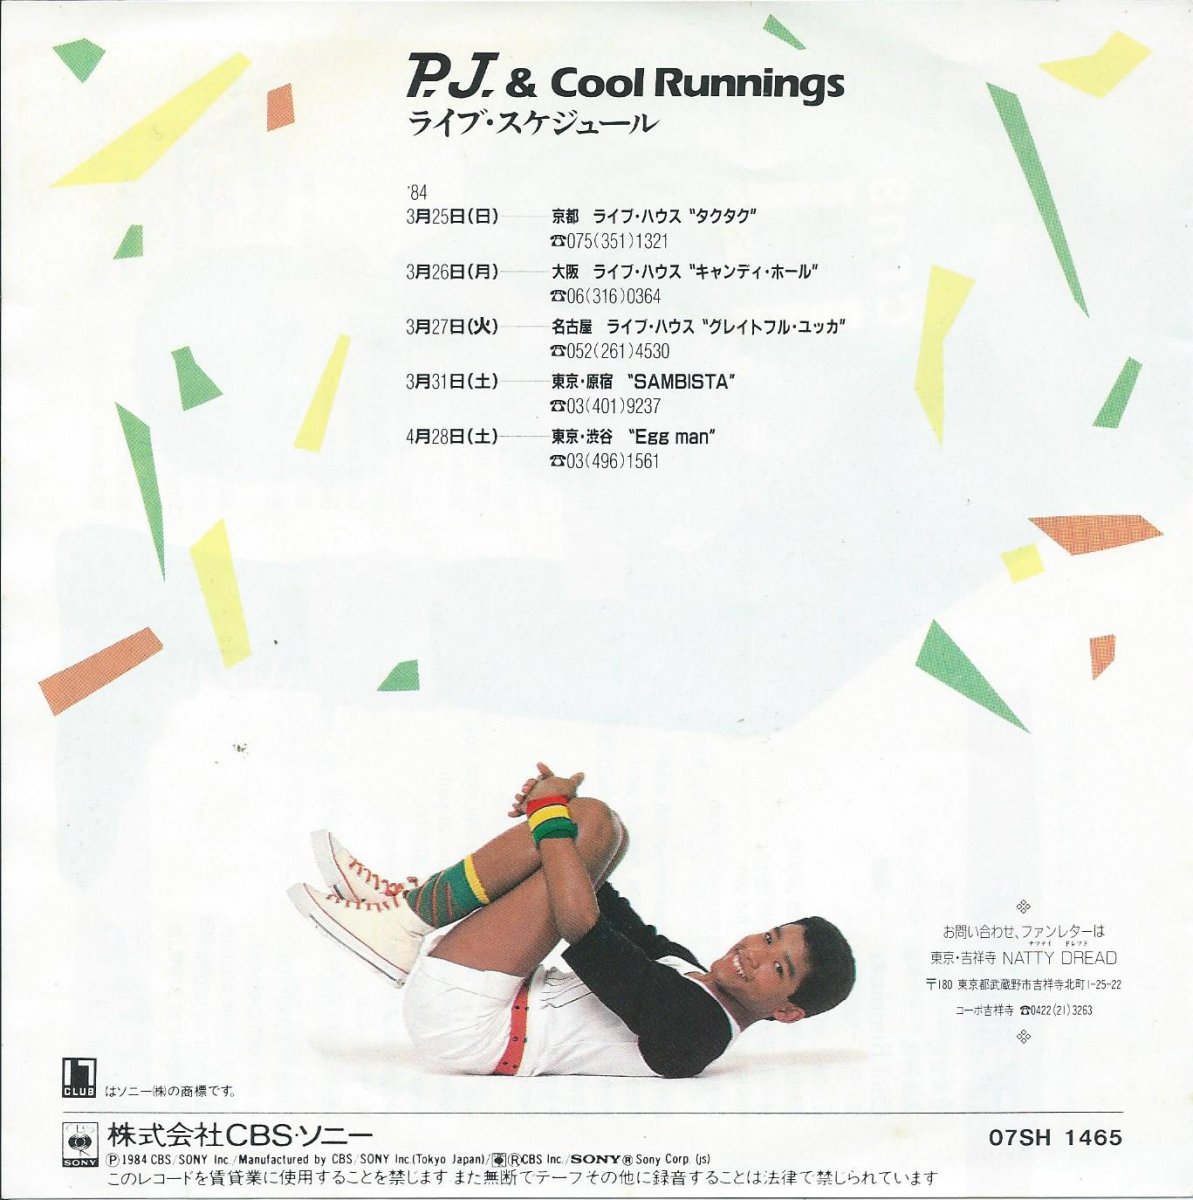 P.J. & COOL RUNNINGS / 17 CLUB (SEVENTEEN CLUB) / RISING UP (7 